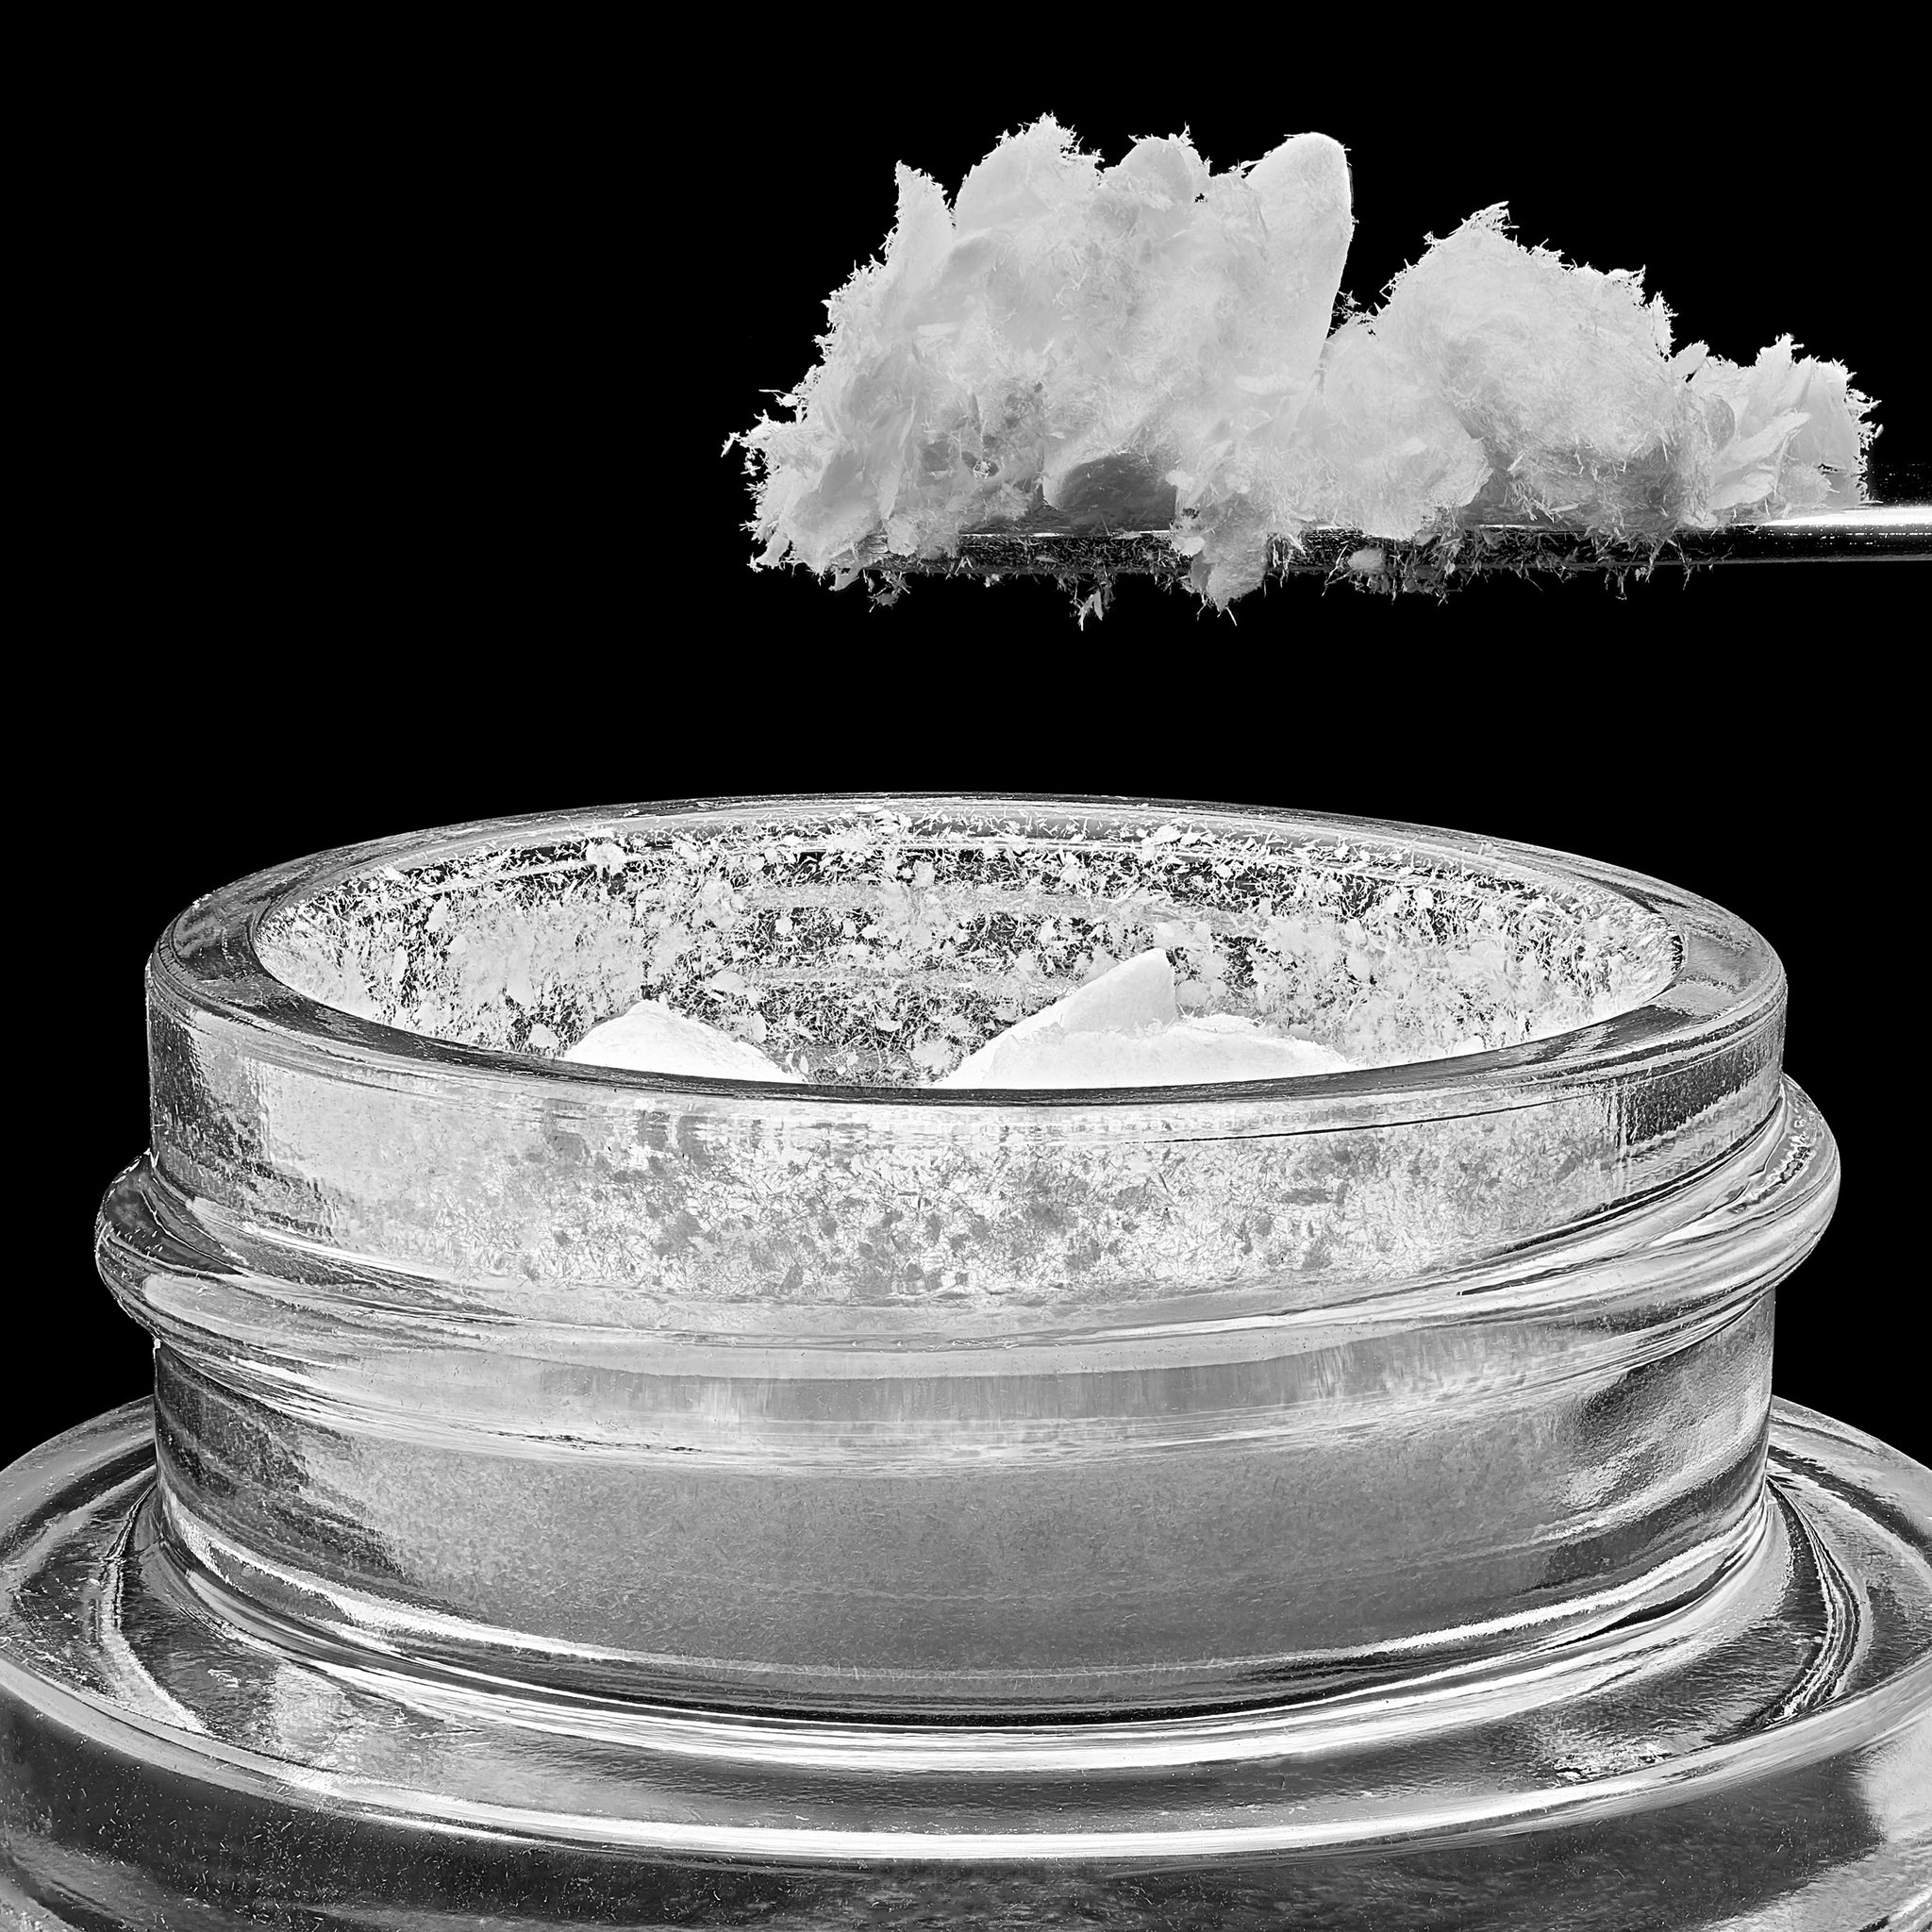 Buy 1gm of CBG Isolate Powder in a Glass jar